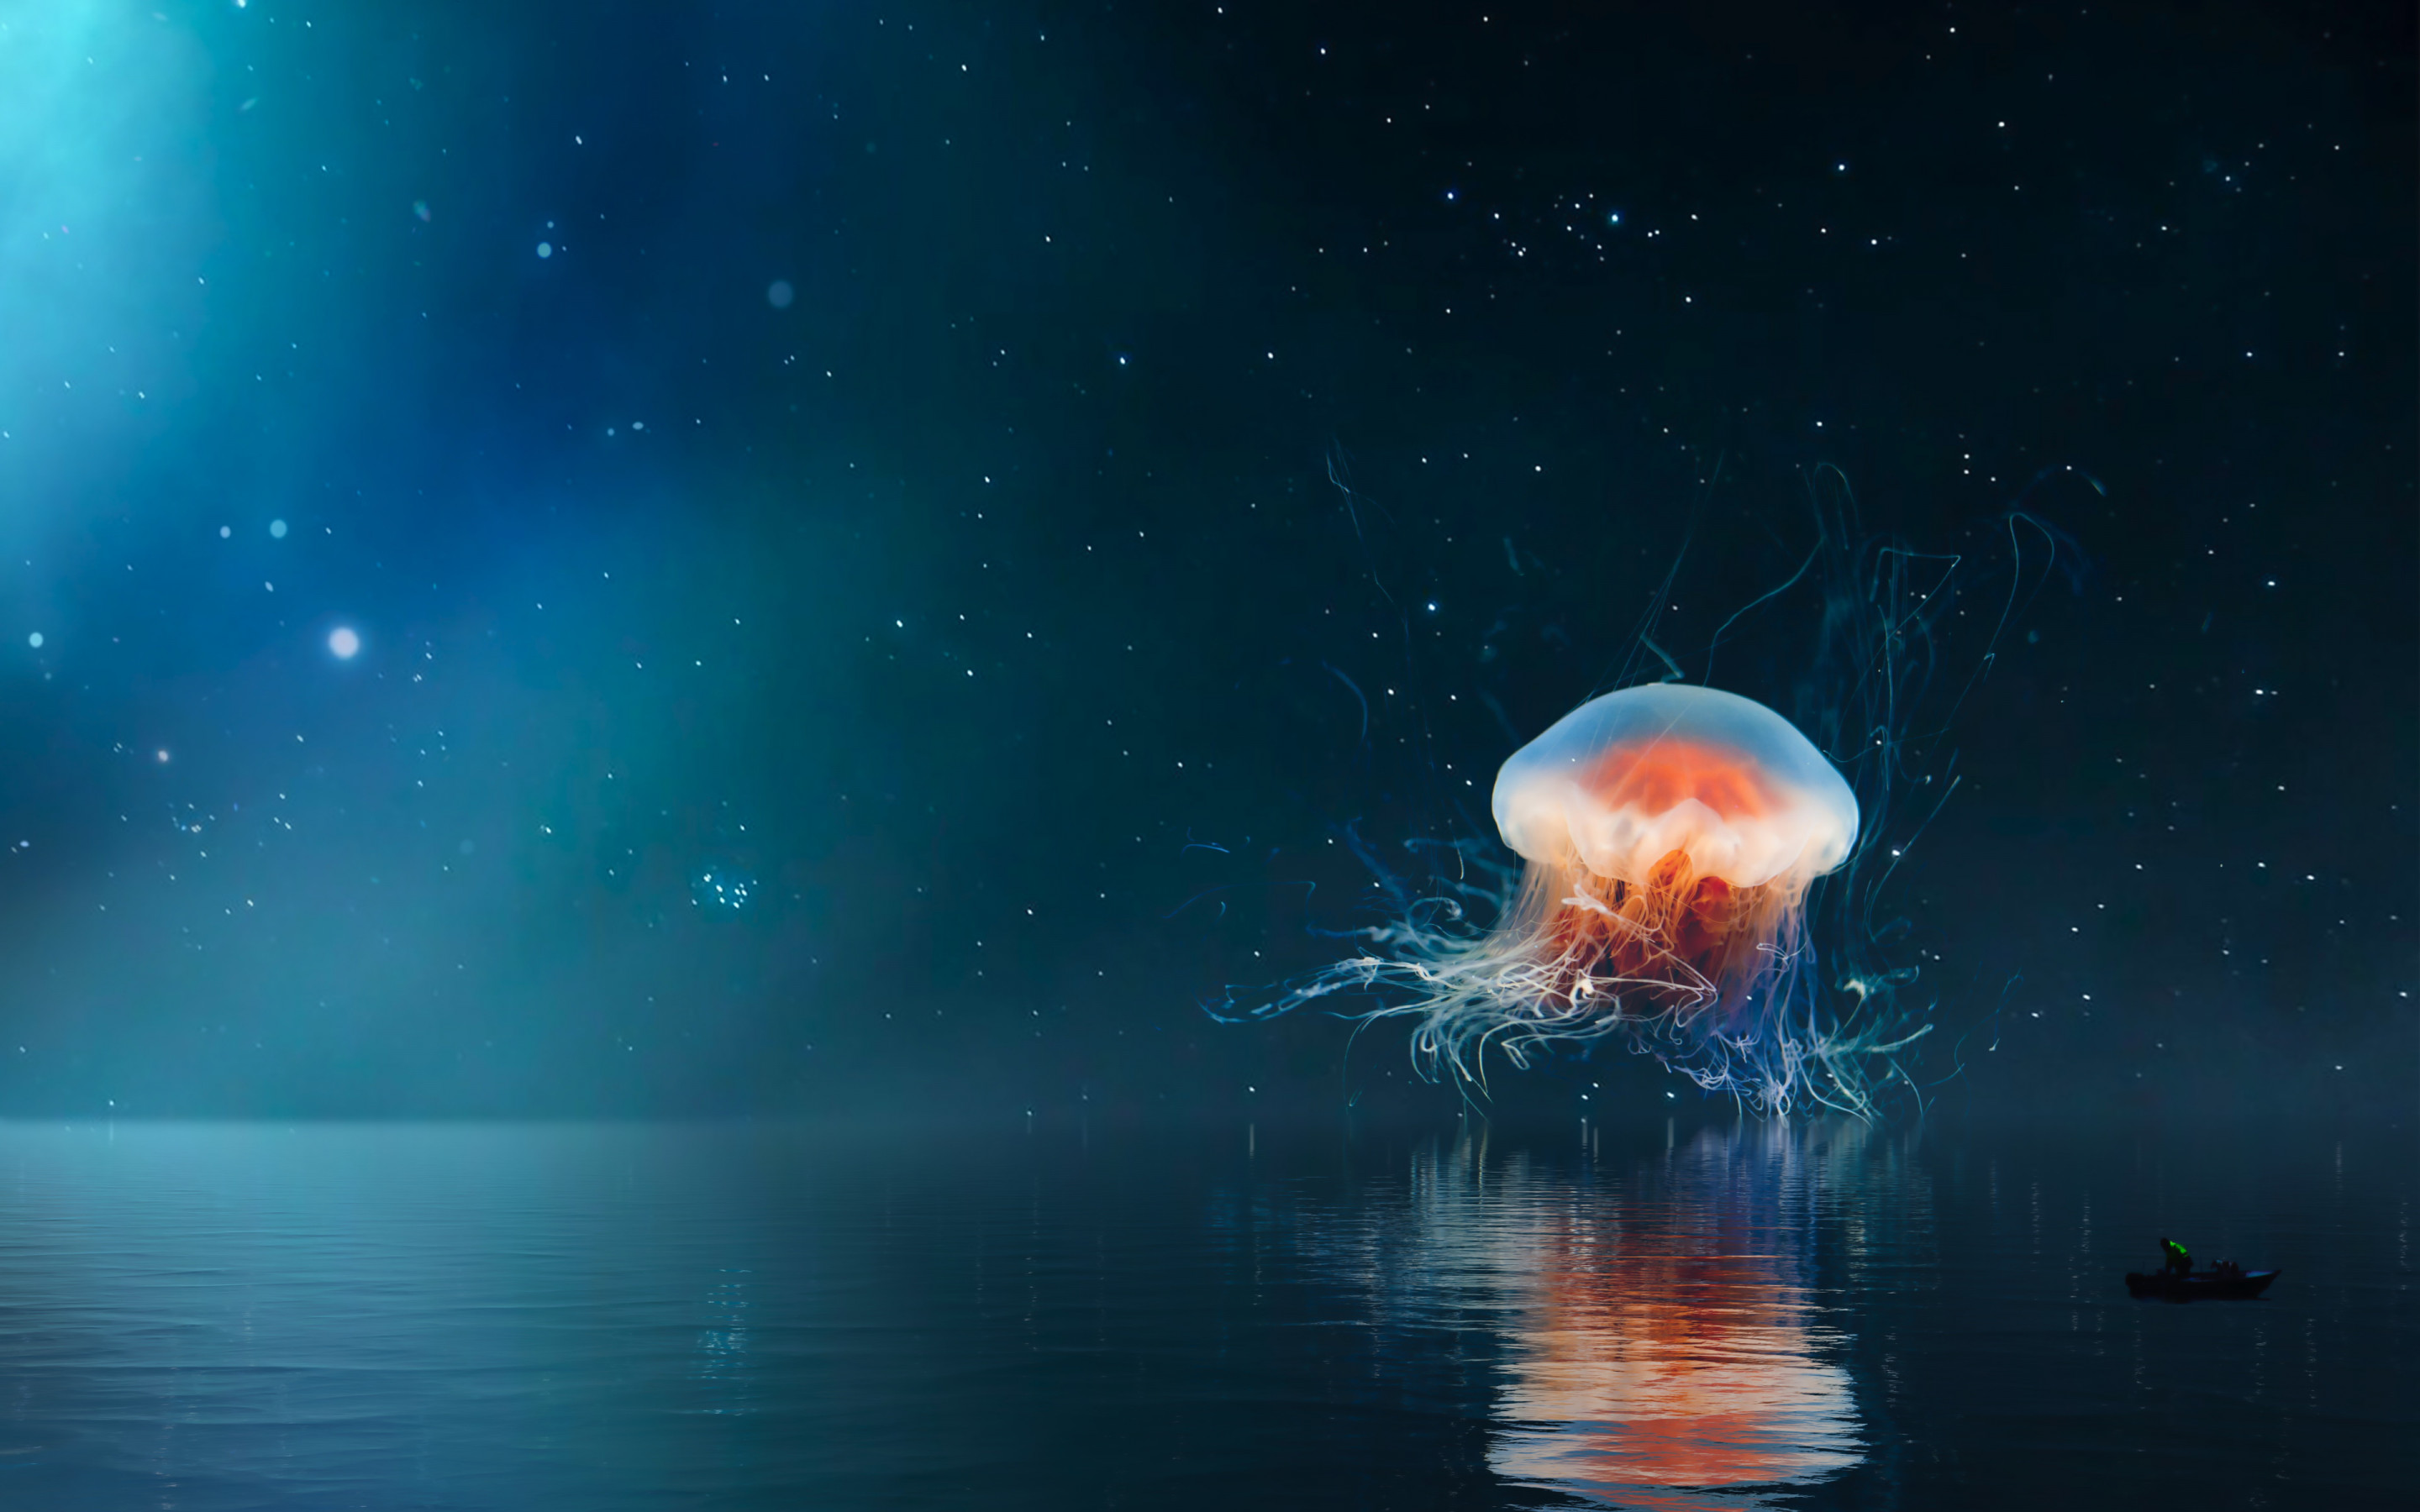 Jellyfish on the night sky wallpaper 2880x1800